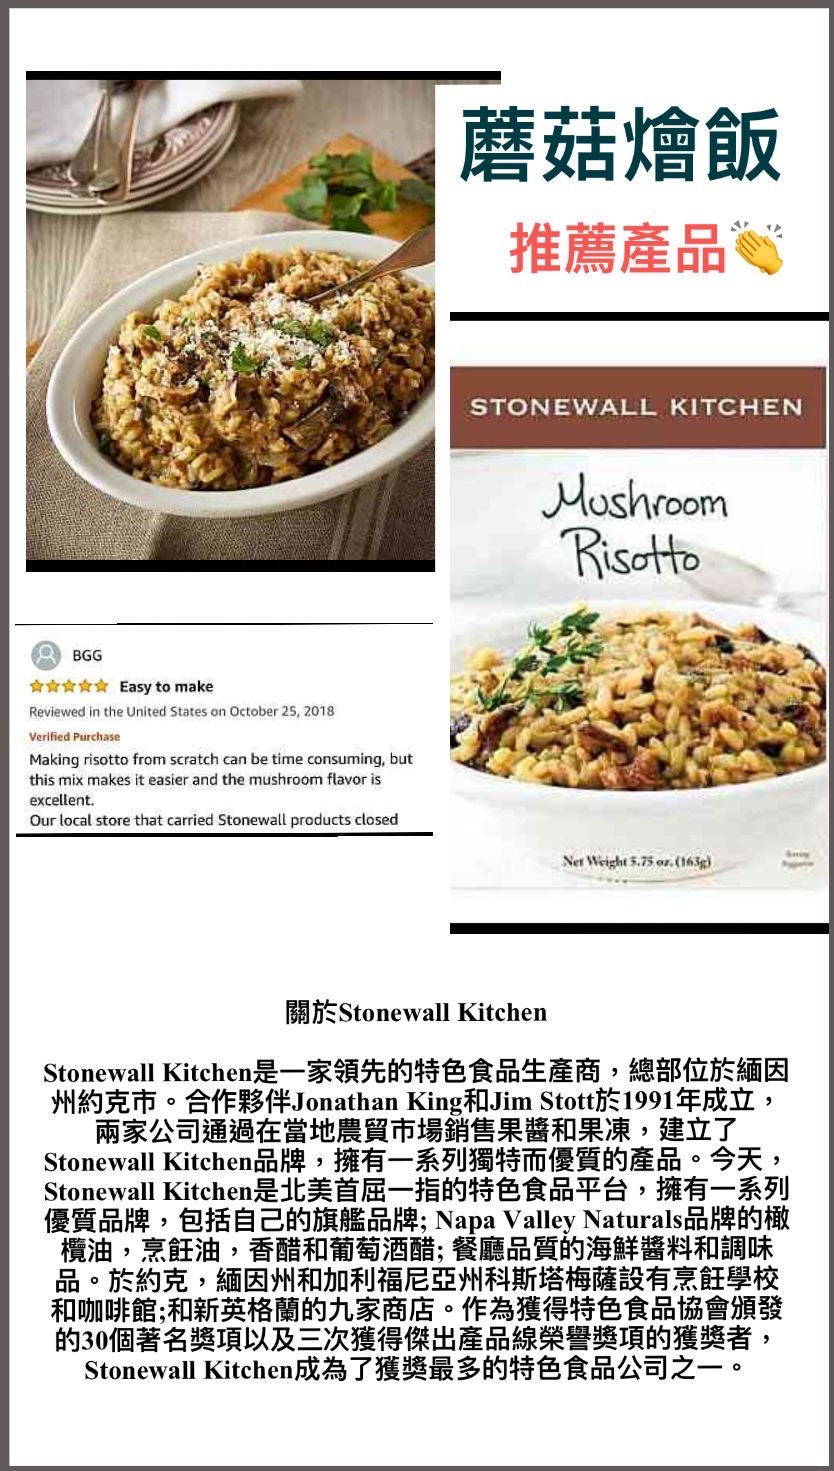 Stonewall Kitchen Mushroom Risotto Mix